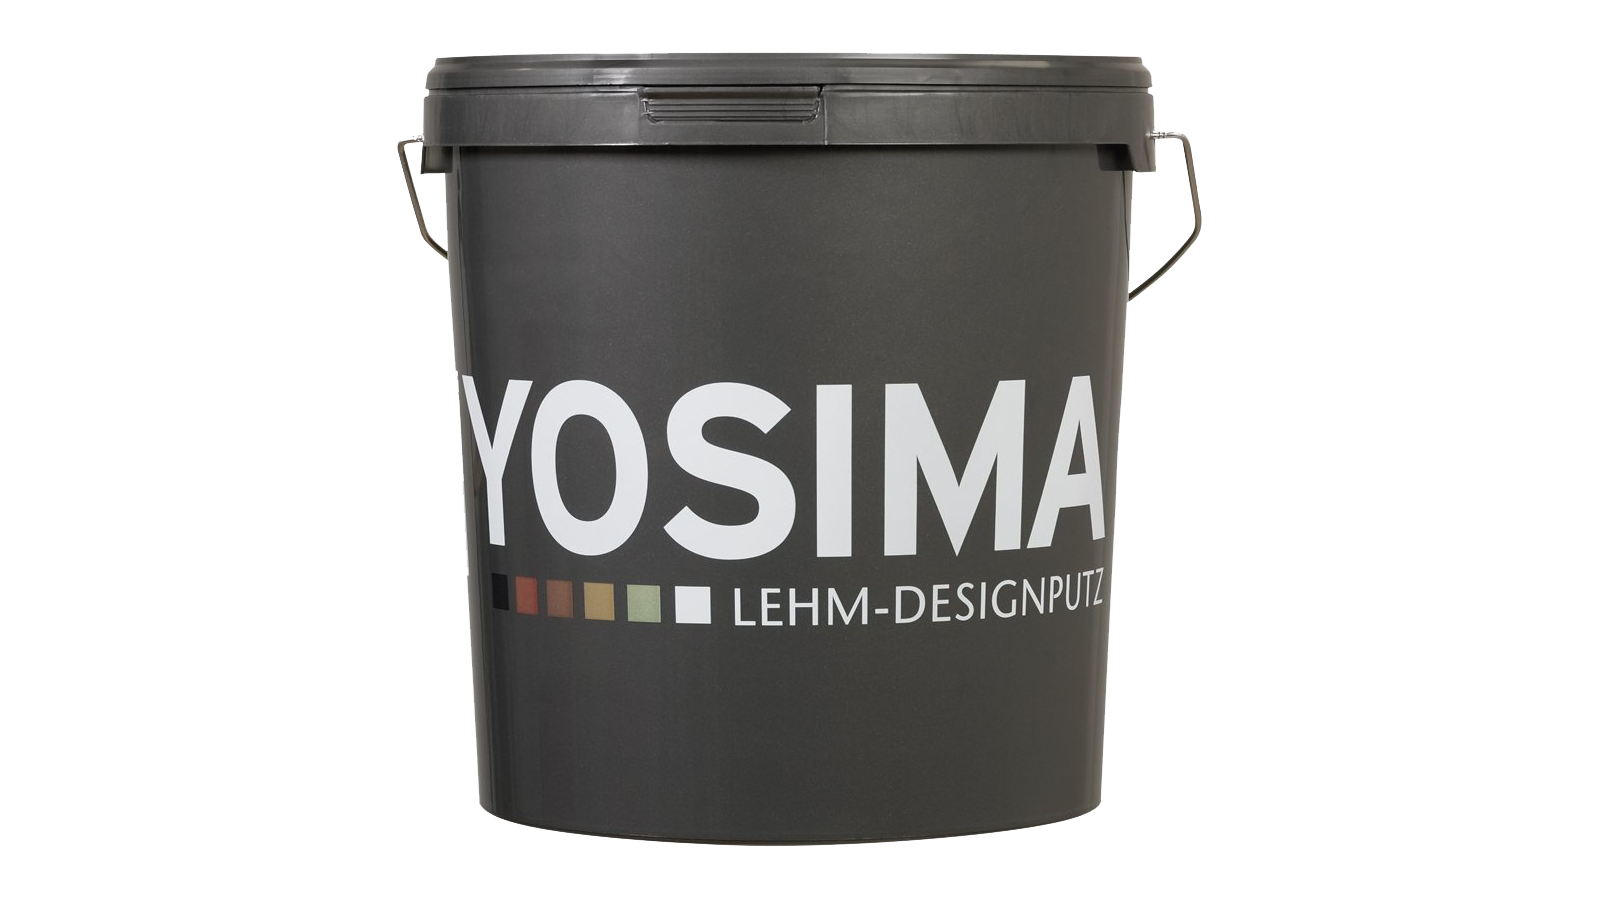 YOSIMA Lehm-Designputz Classic -Farbtöne